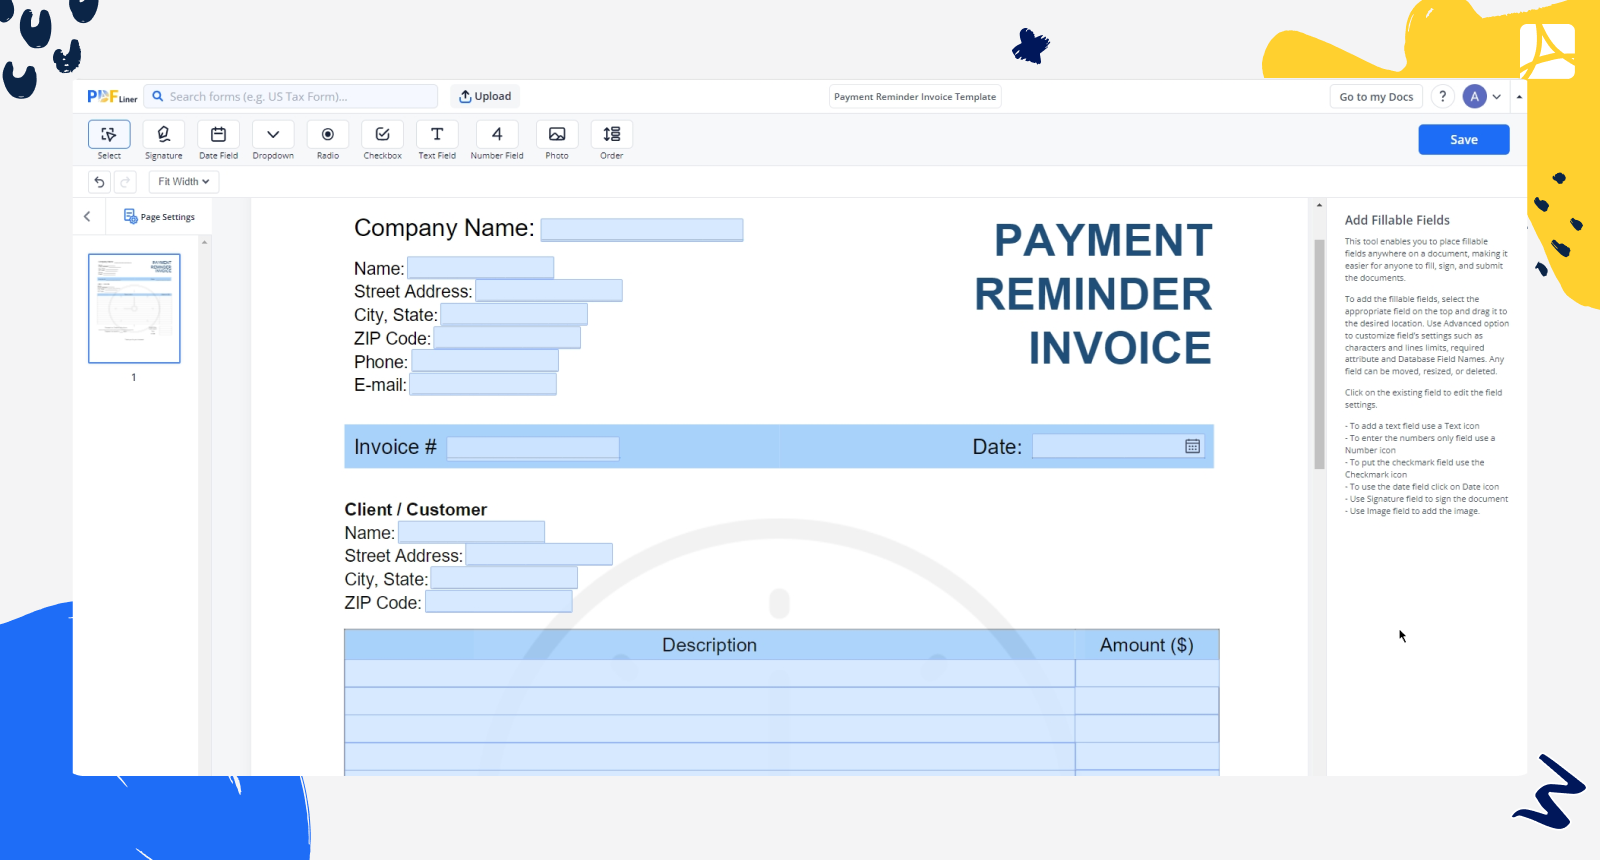 Payment Reminder Invoice Template screenshot